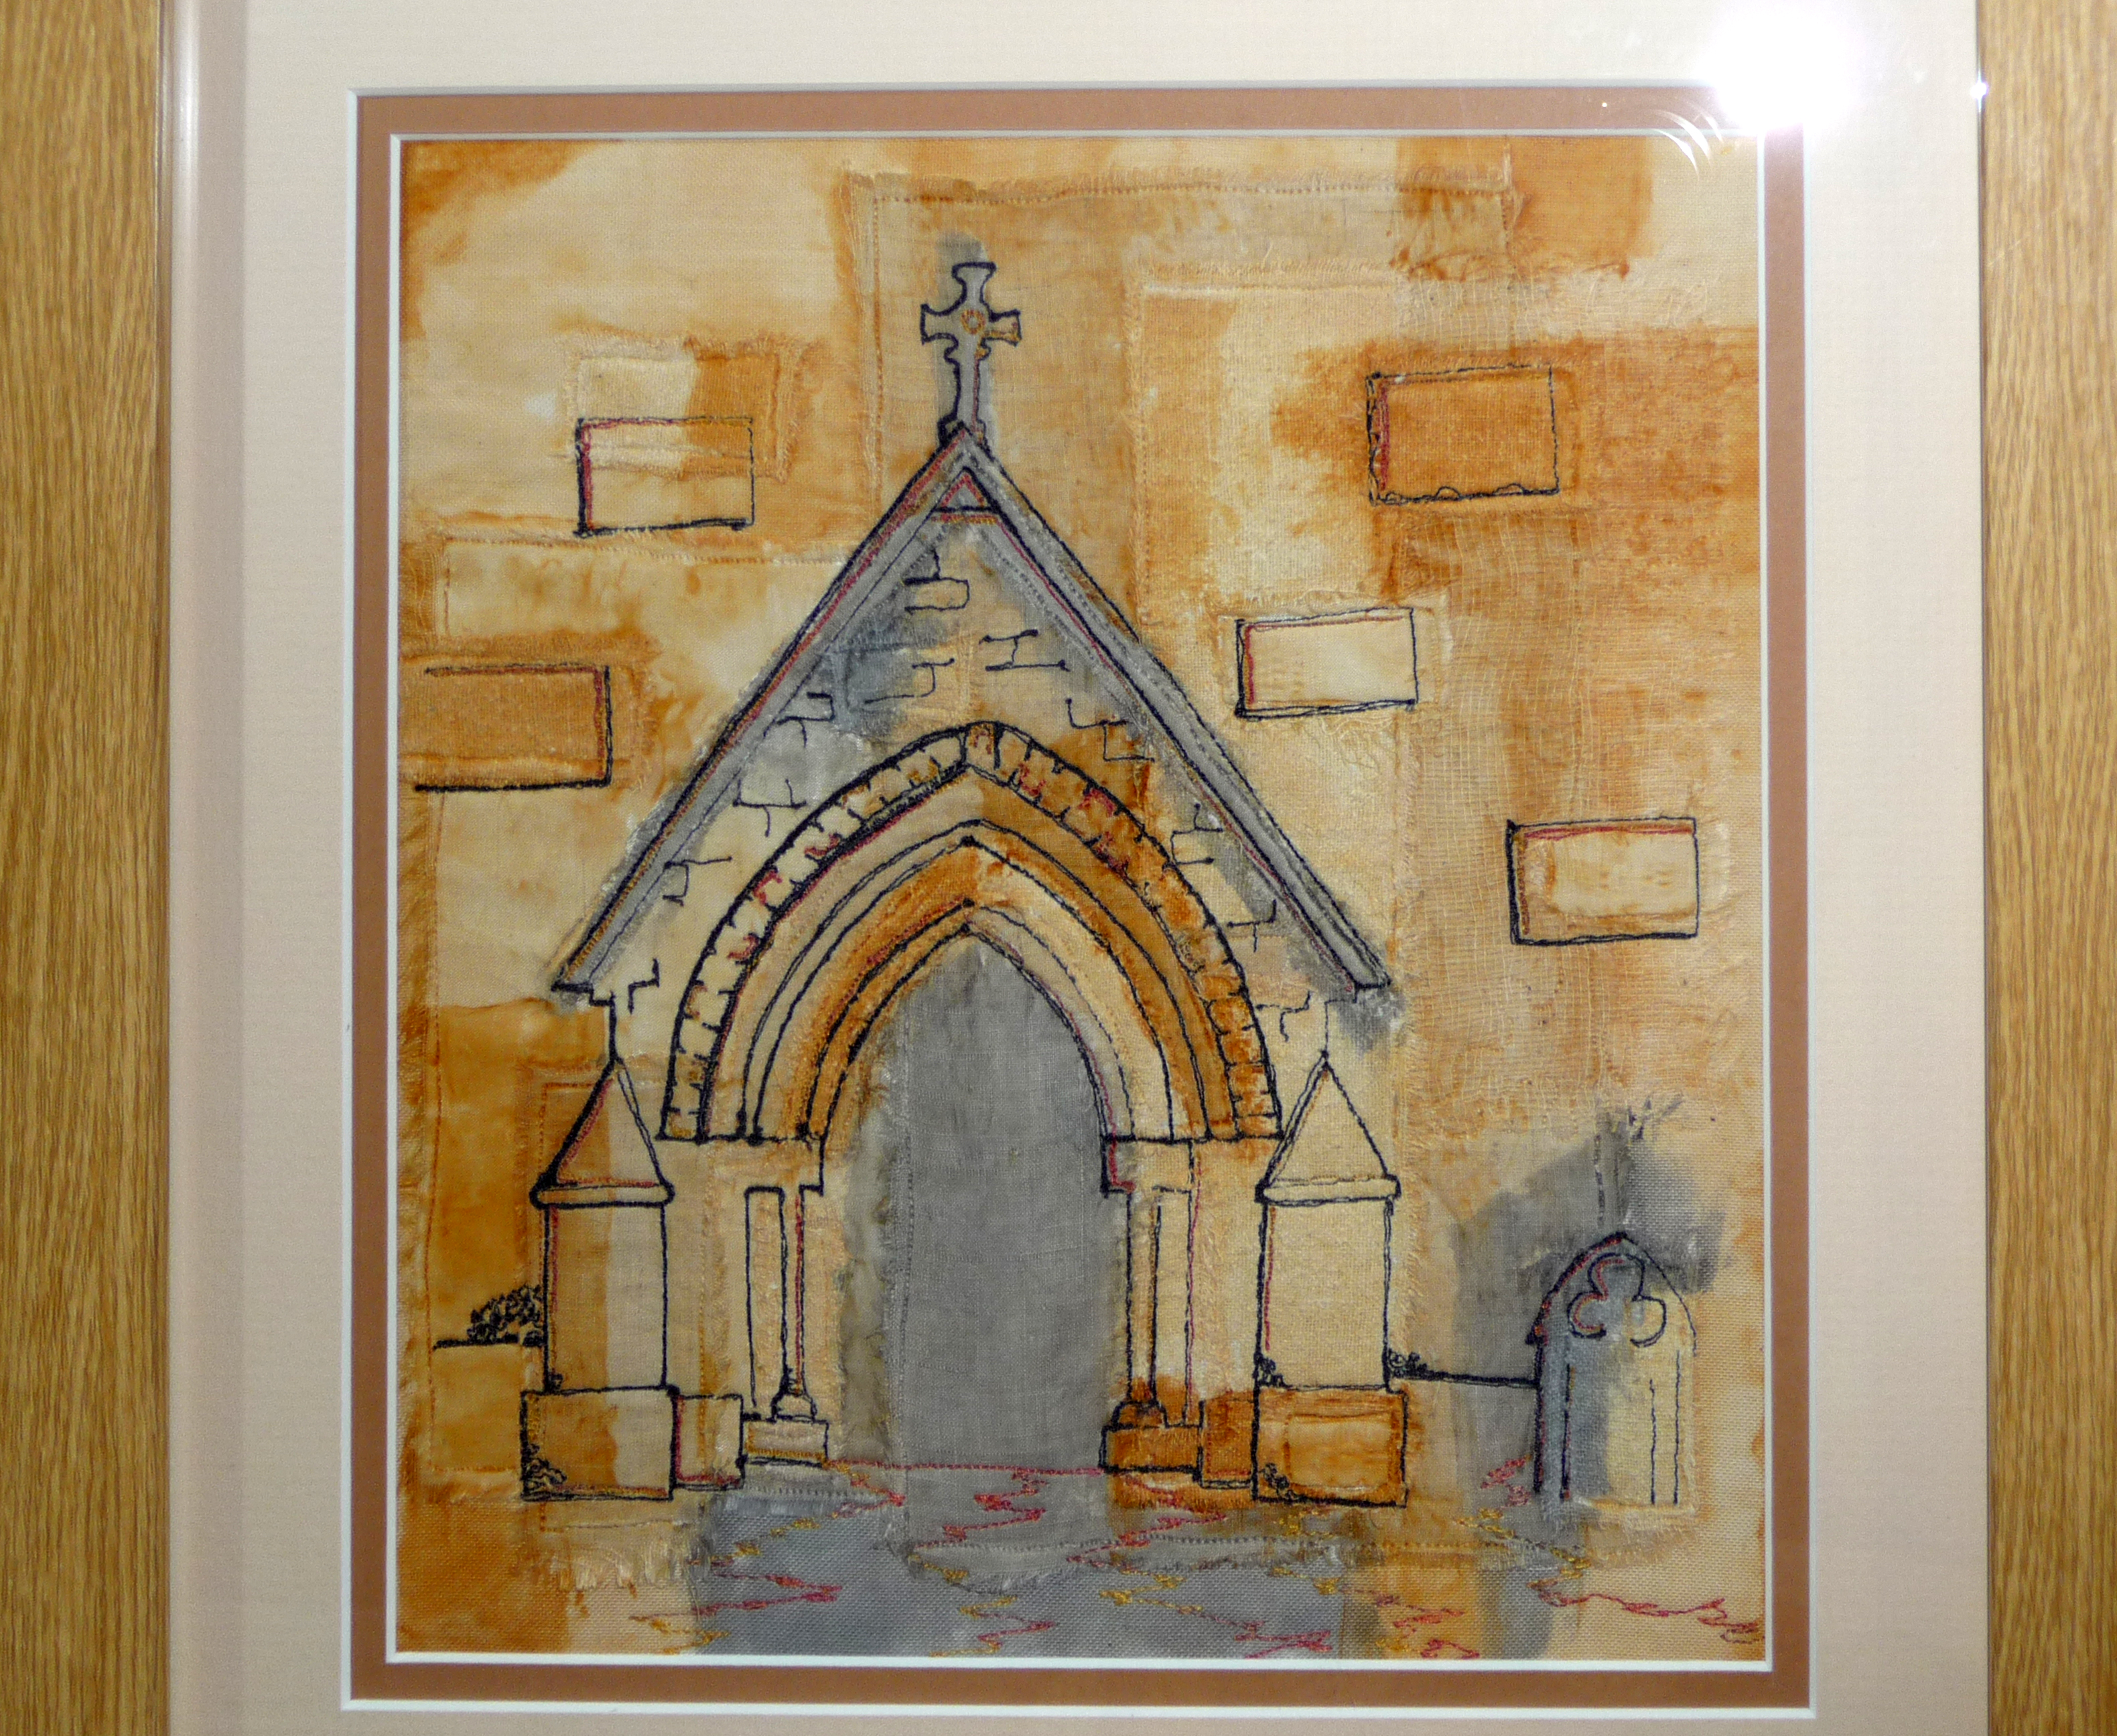 CHURCH GATE by Sarah Rakestraw, free machine embroidery